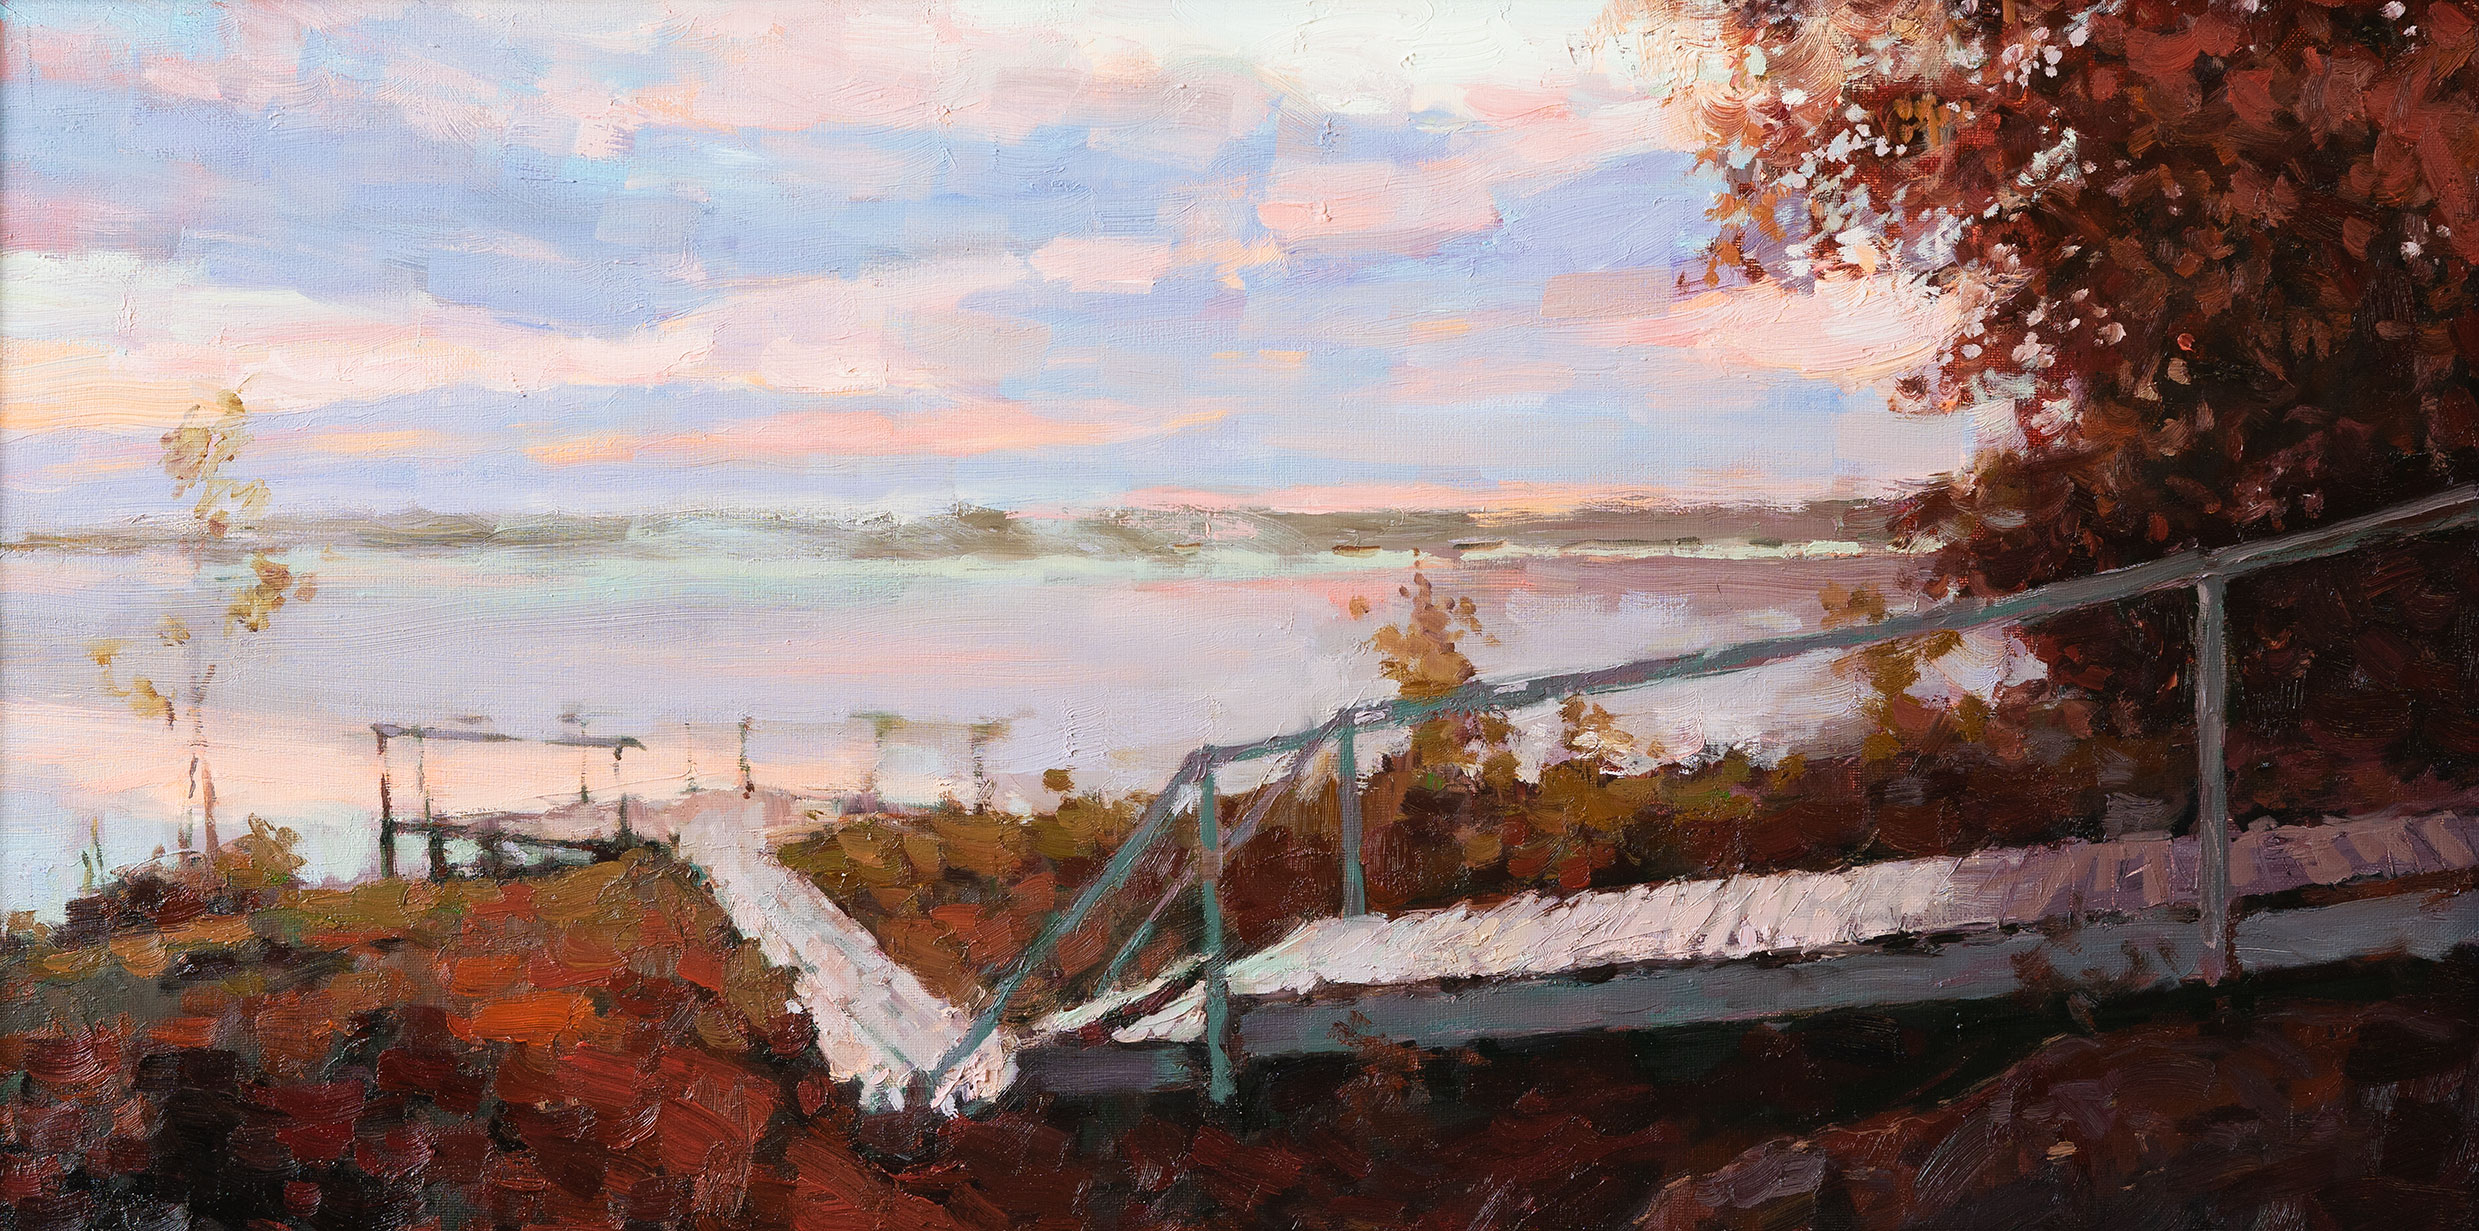 The Bridges on the Banks of Shartash - 1, Sergei Prokhorov, Buy the painting Oil